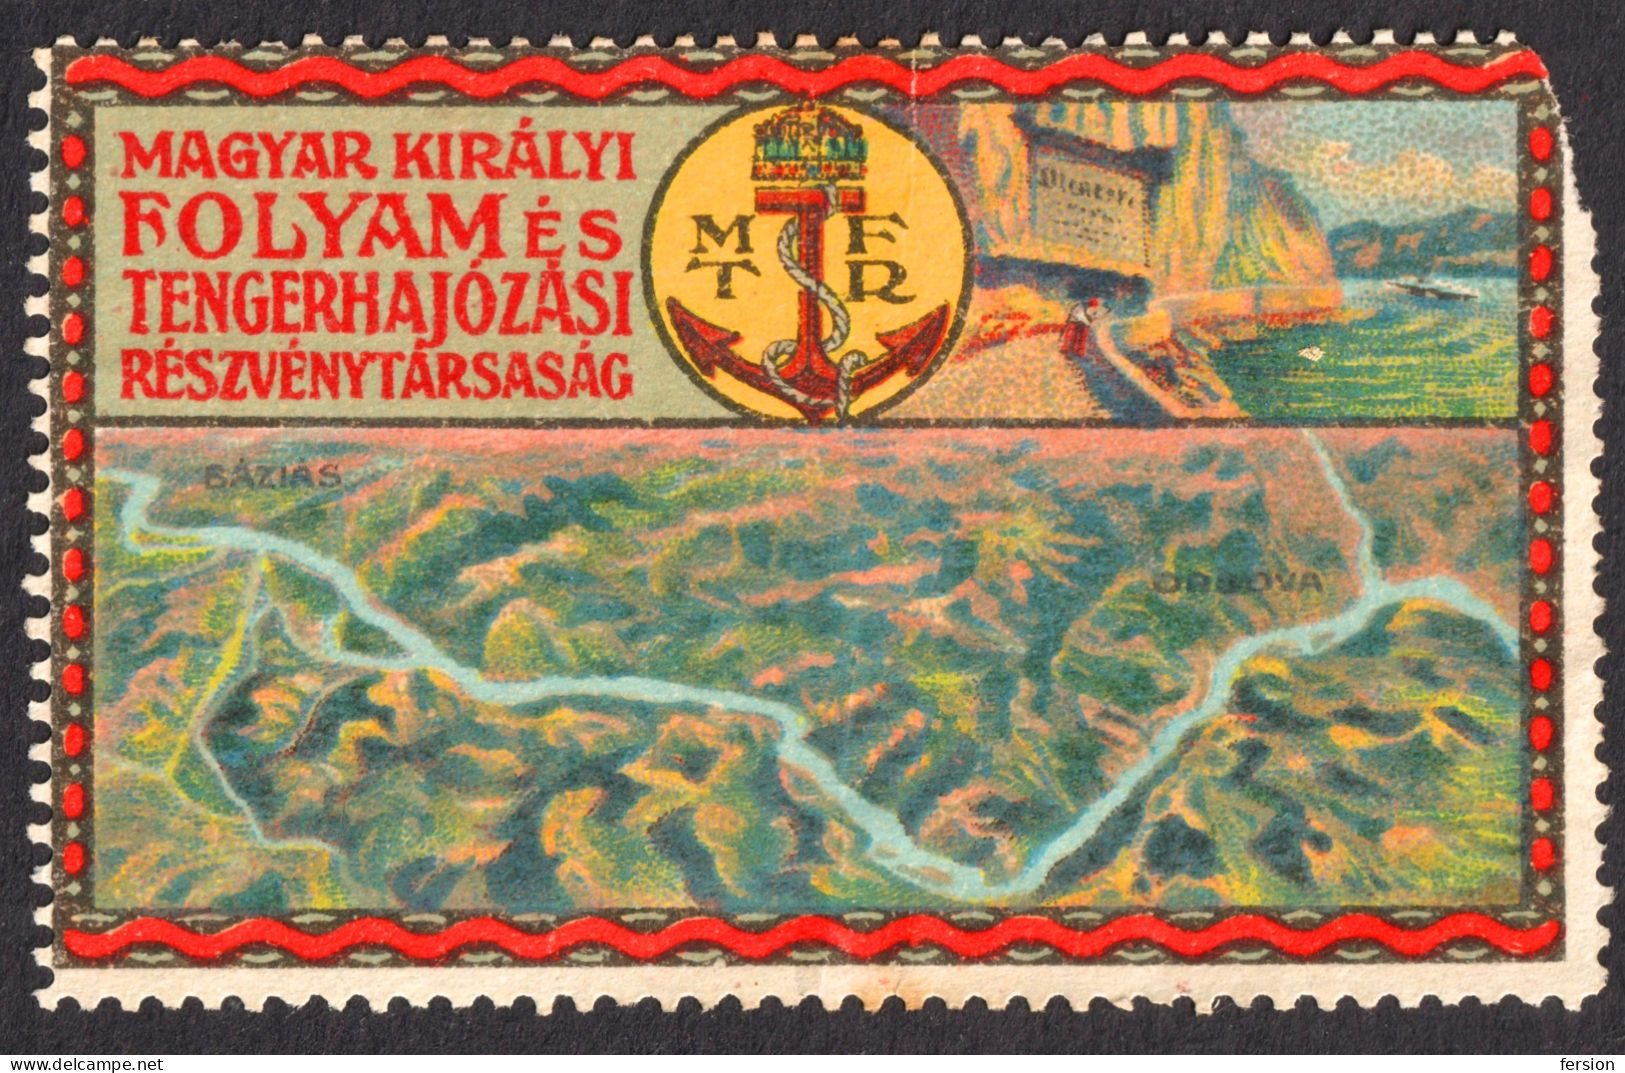 Iron Gates DANUBE Steamer River Transylvania HUNGARY Romania Serbia MAP 1910 Orsova Báziás VIGNETTE LABEL CINDERELLA - Transilvania